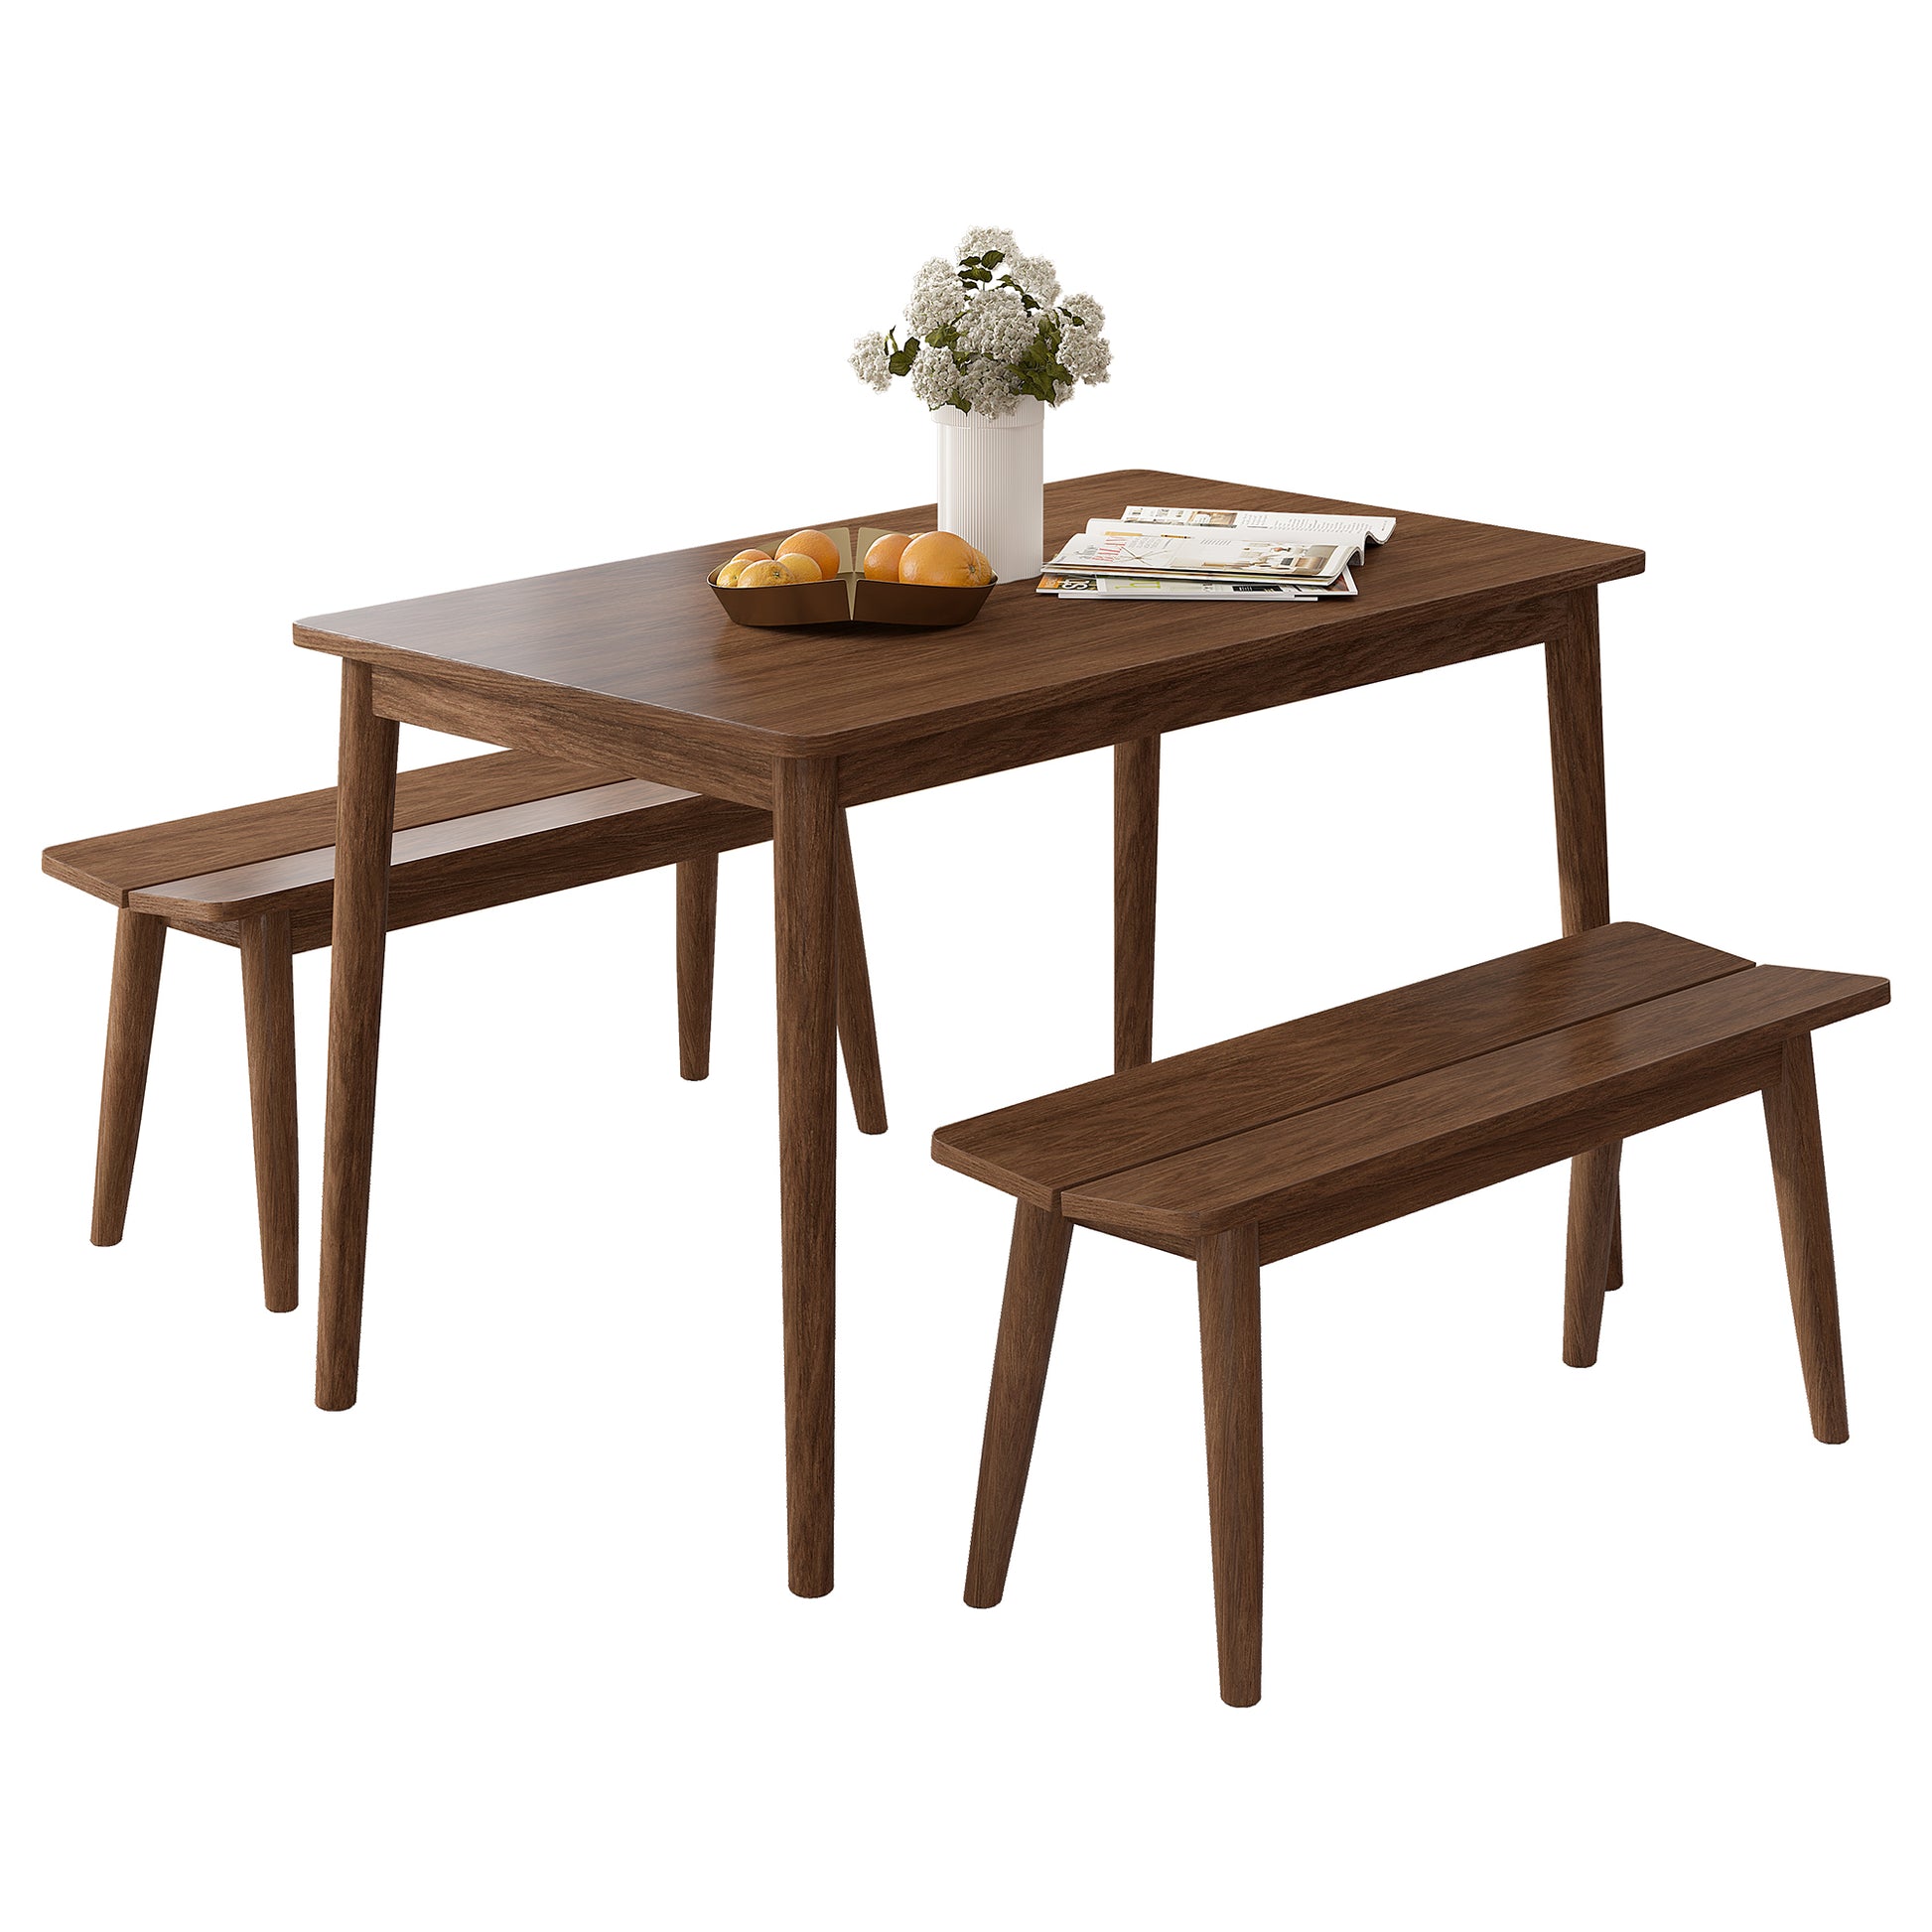 3 PCS Wooden Dining Table Set - Ukerr Home